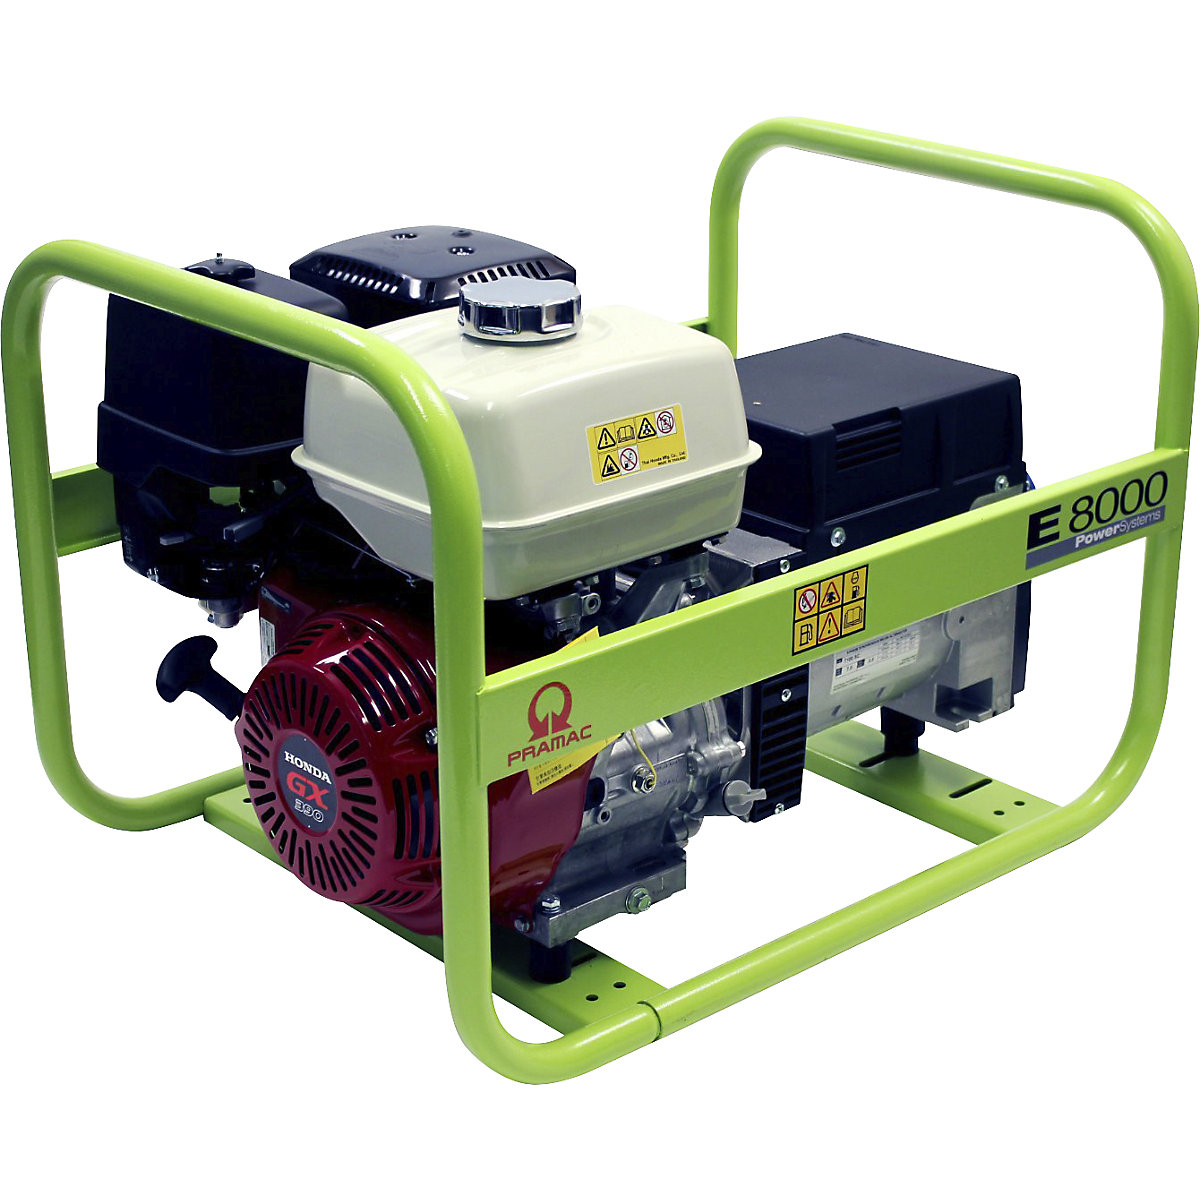 Generador eléctrico serie E – gasolina, 230 V – Pramac (Imagen del producto 2)-1